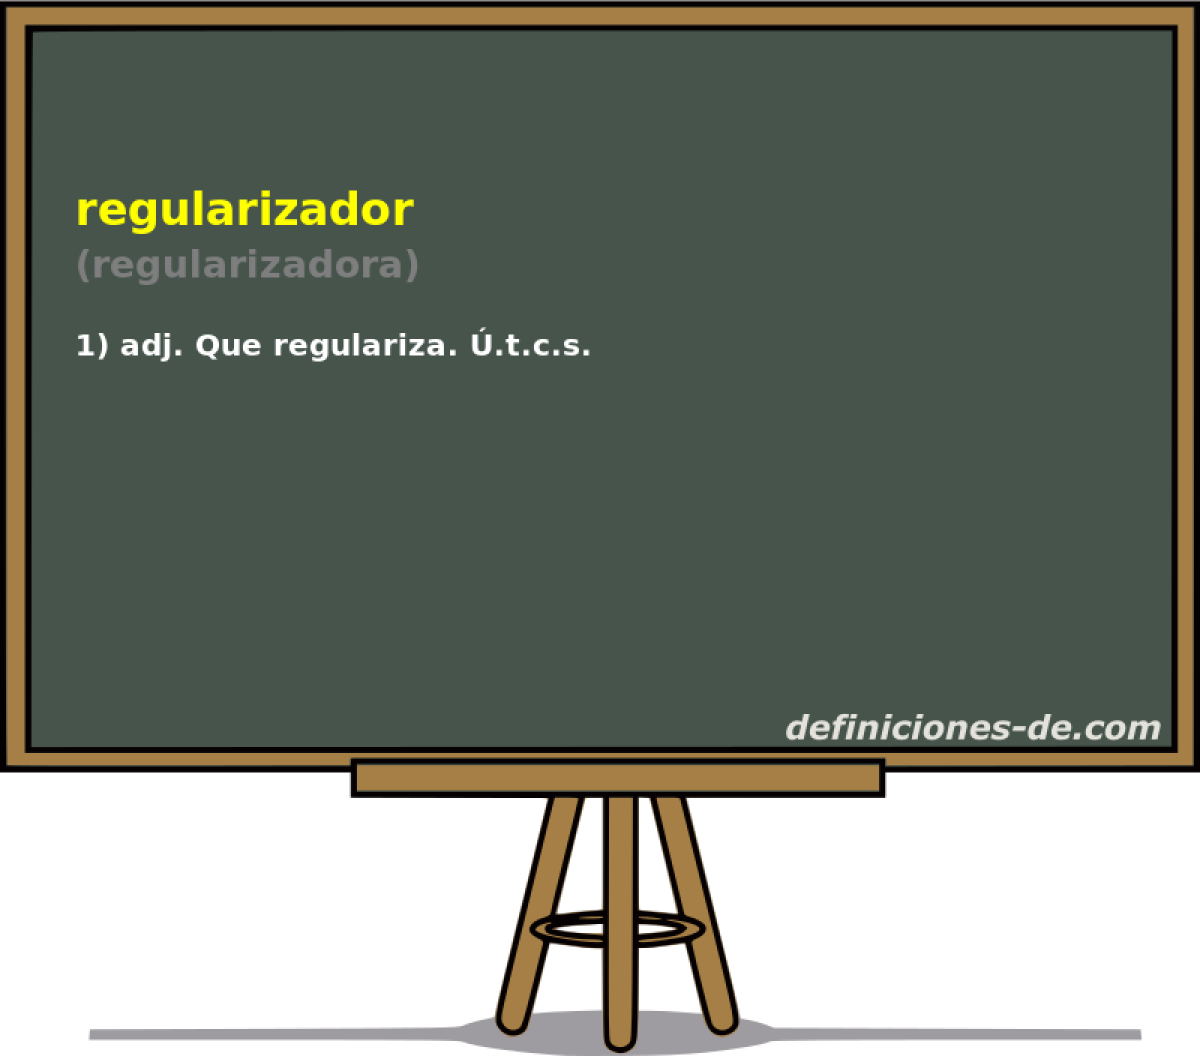 regularizador (regularizadora)